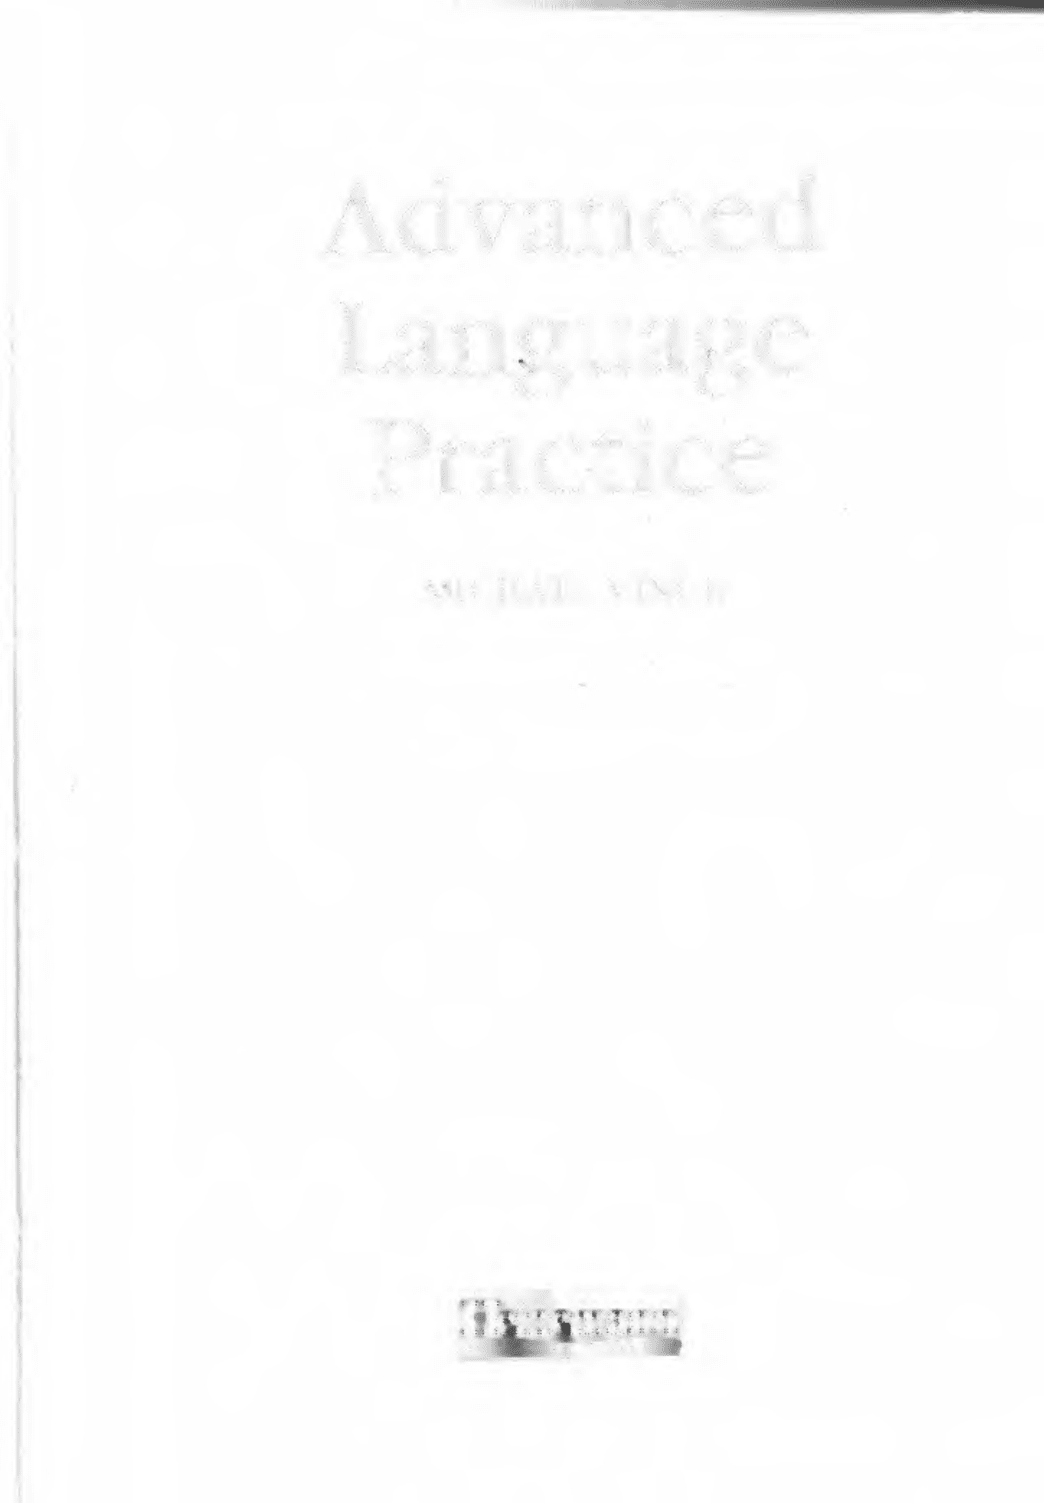 Michael Vince Advanced Language Practice Pdf Vince Michael. Advanced Language Practice (Book with key)